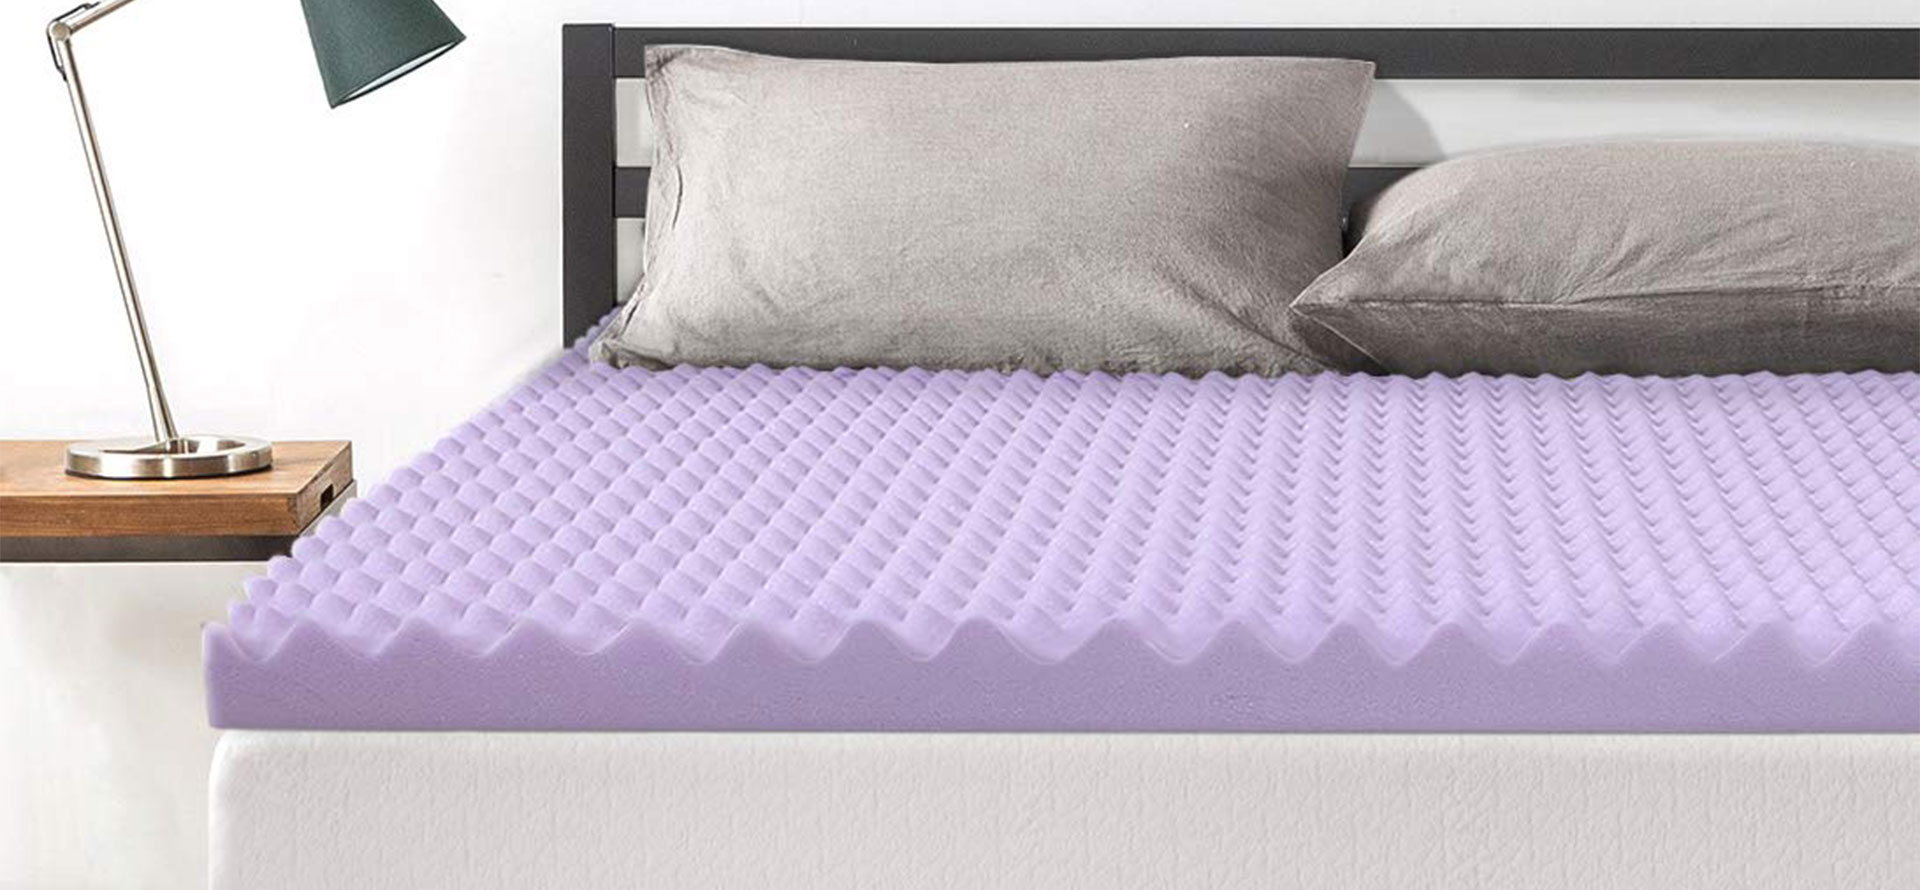 Cooling mattress topper purple.